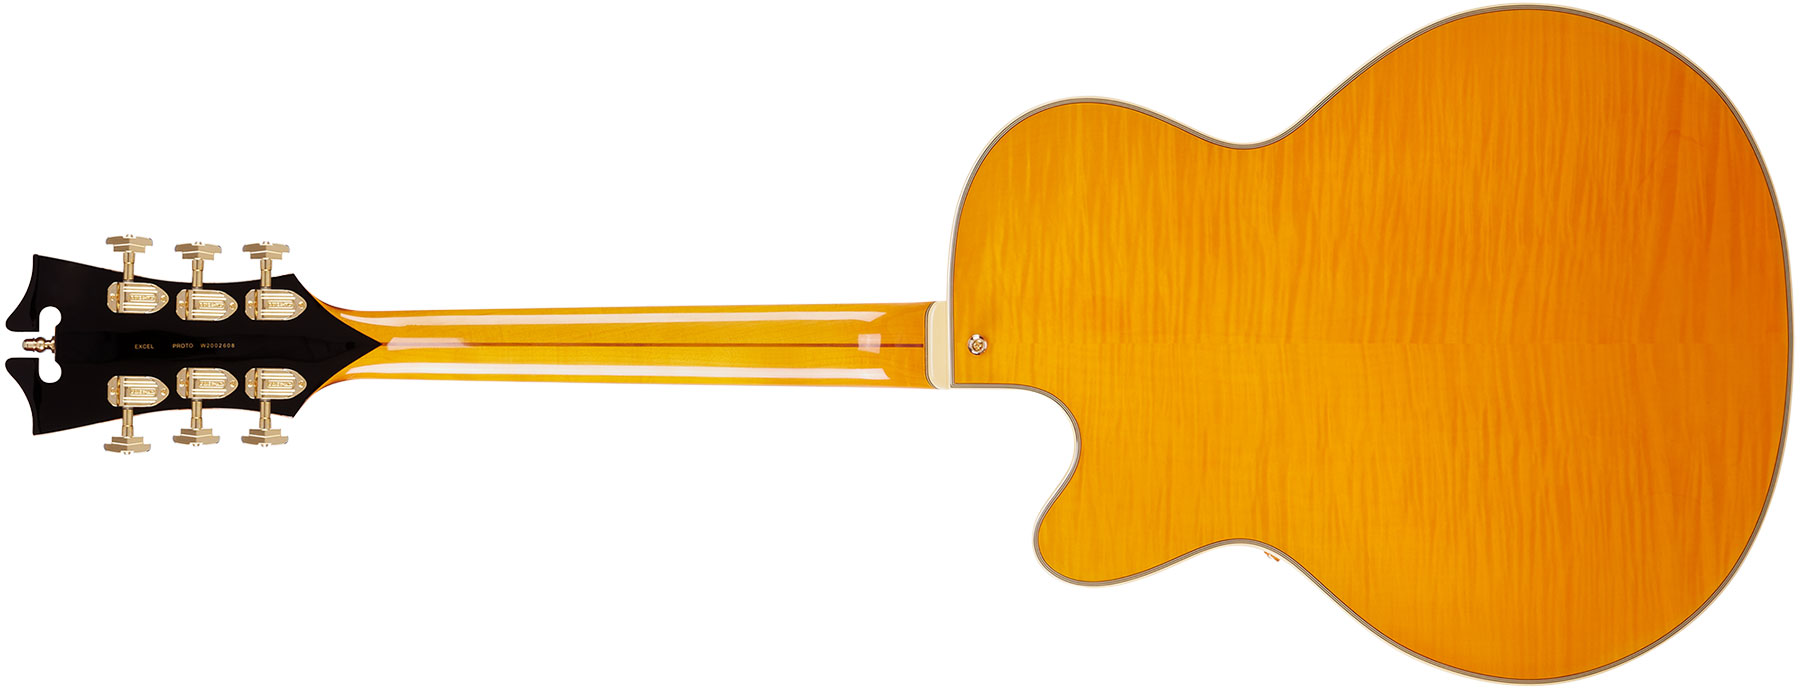 D'angelico 59 Excel 2s P90 Ht Eb - Vintage Natural - Hollow bodytock elektrische gitaar - Variation 2